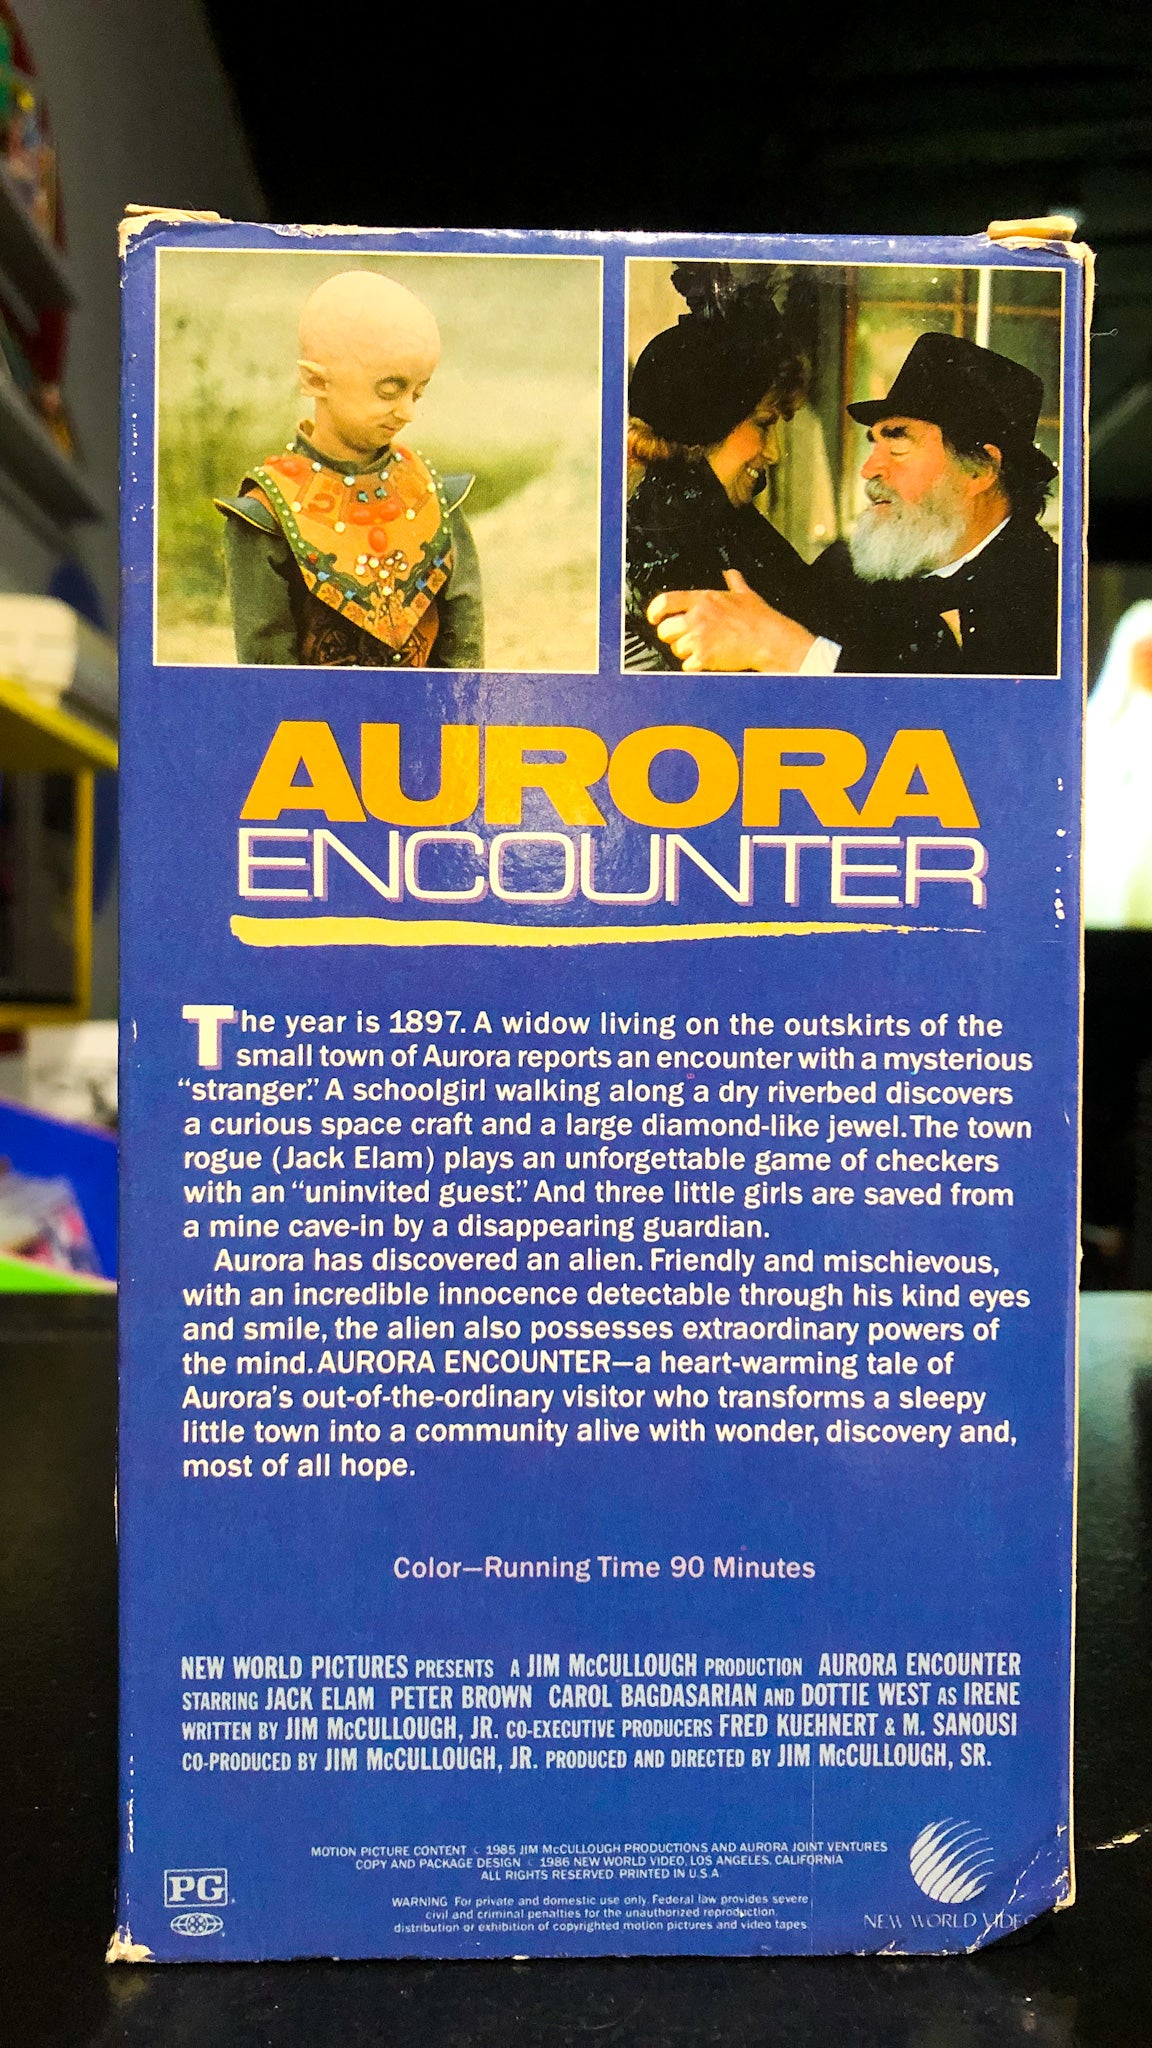 The Aurora Encounter